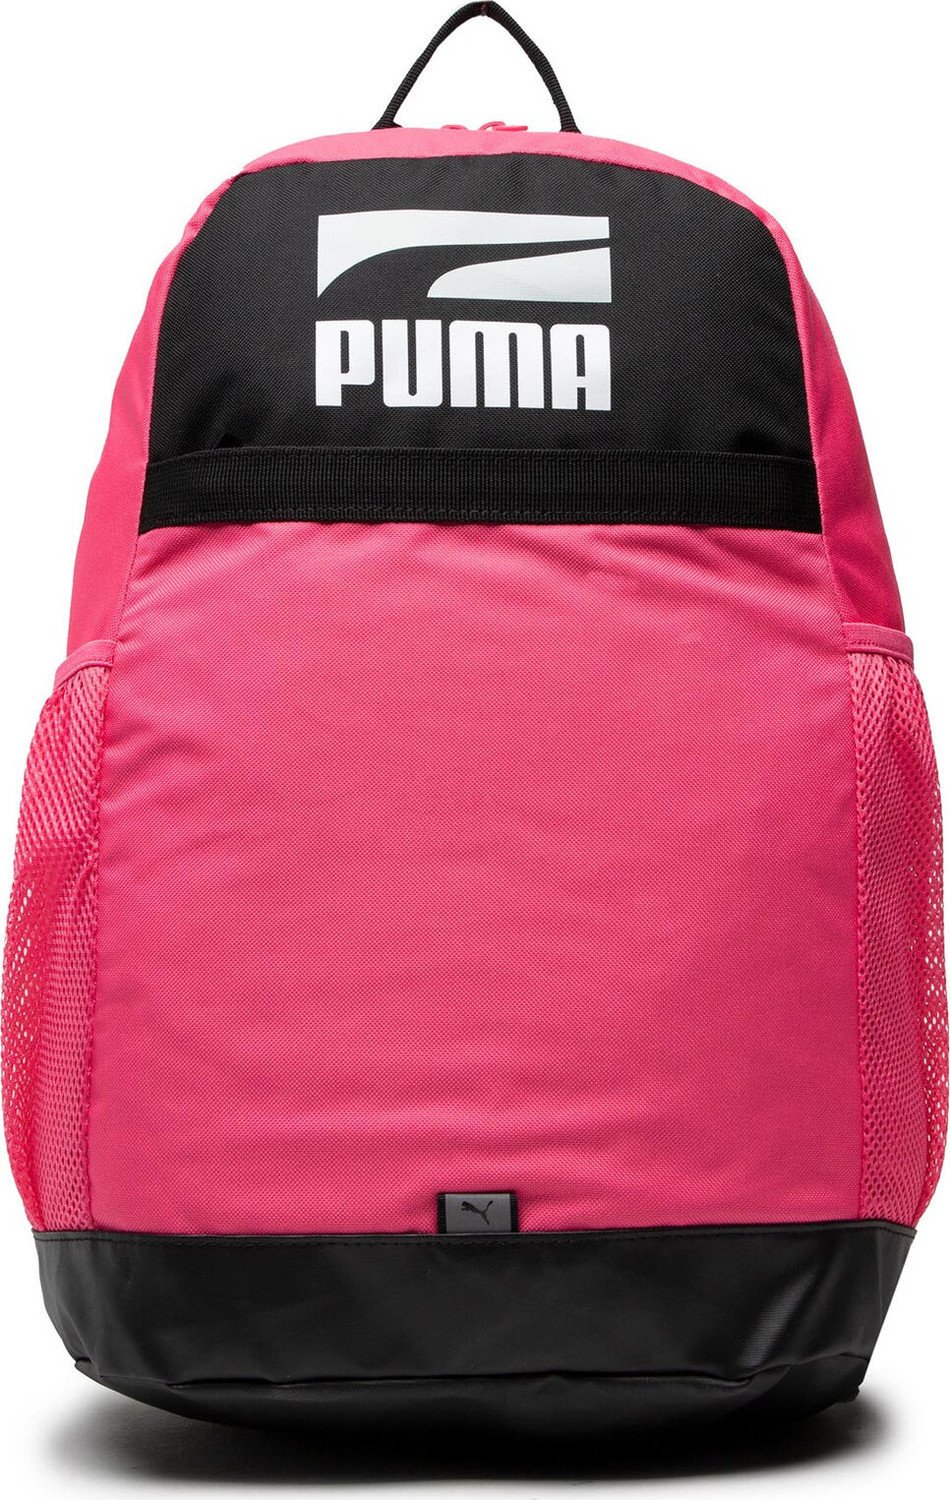 Batoh Puma Plus Backpack II 078391 11 Sunset Pink